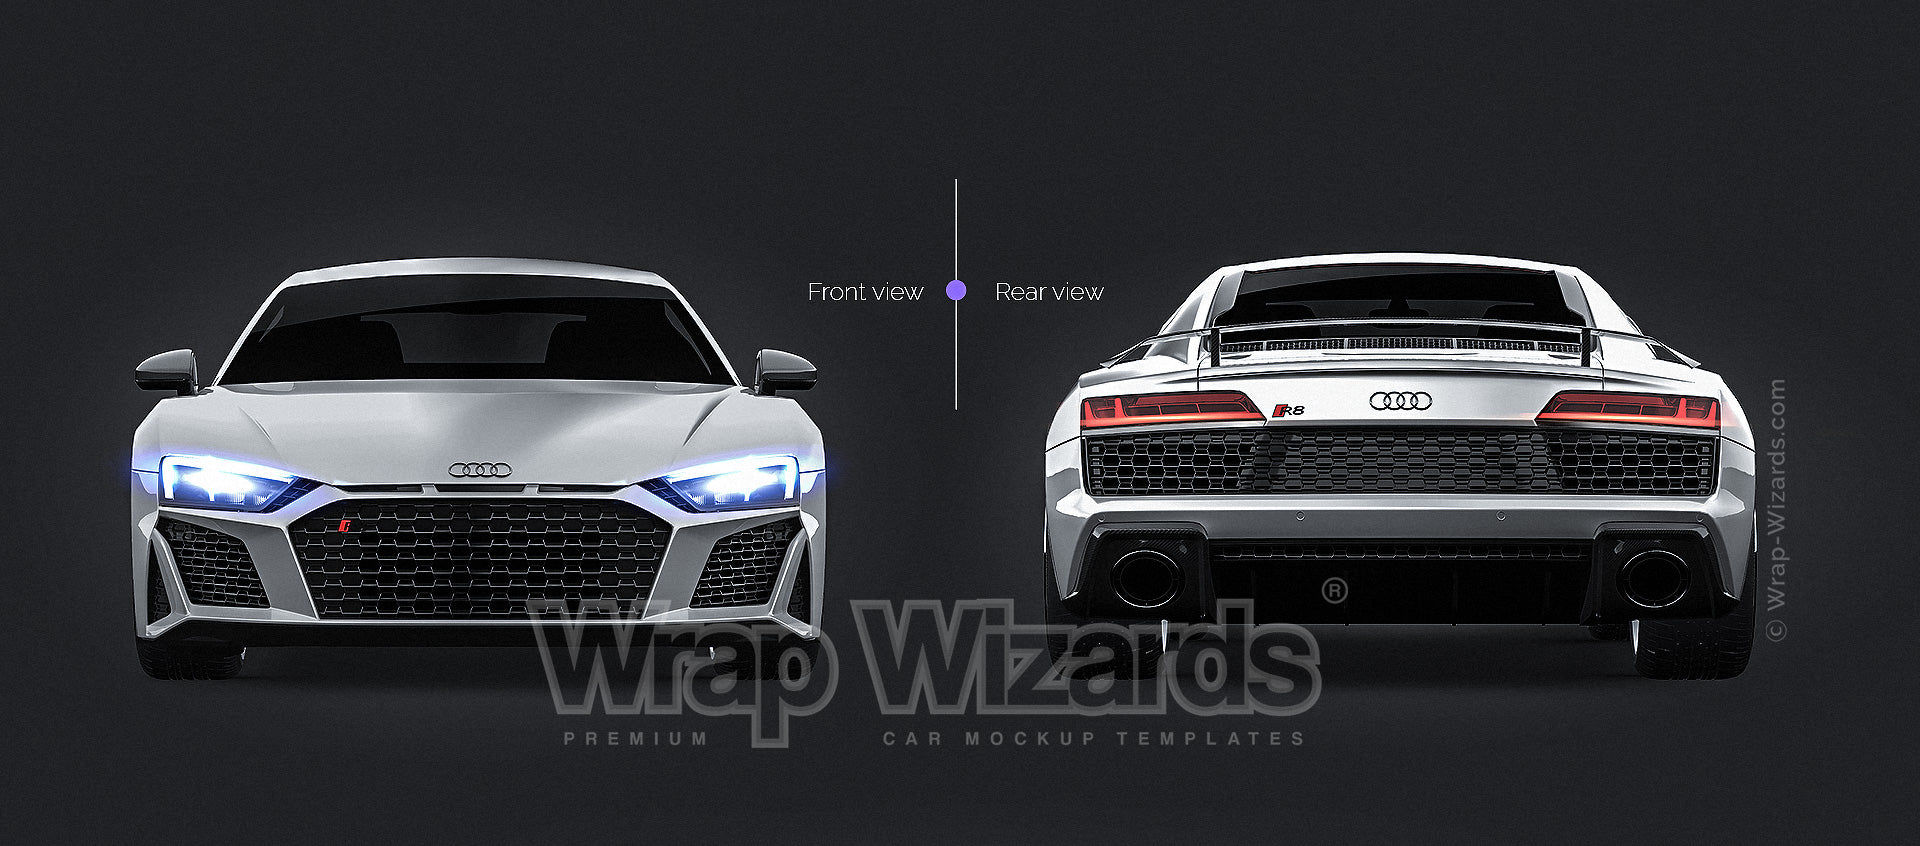 Audi R8 2019 - Car Mockup